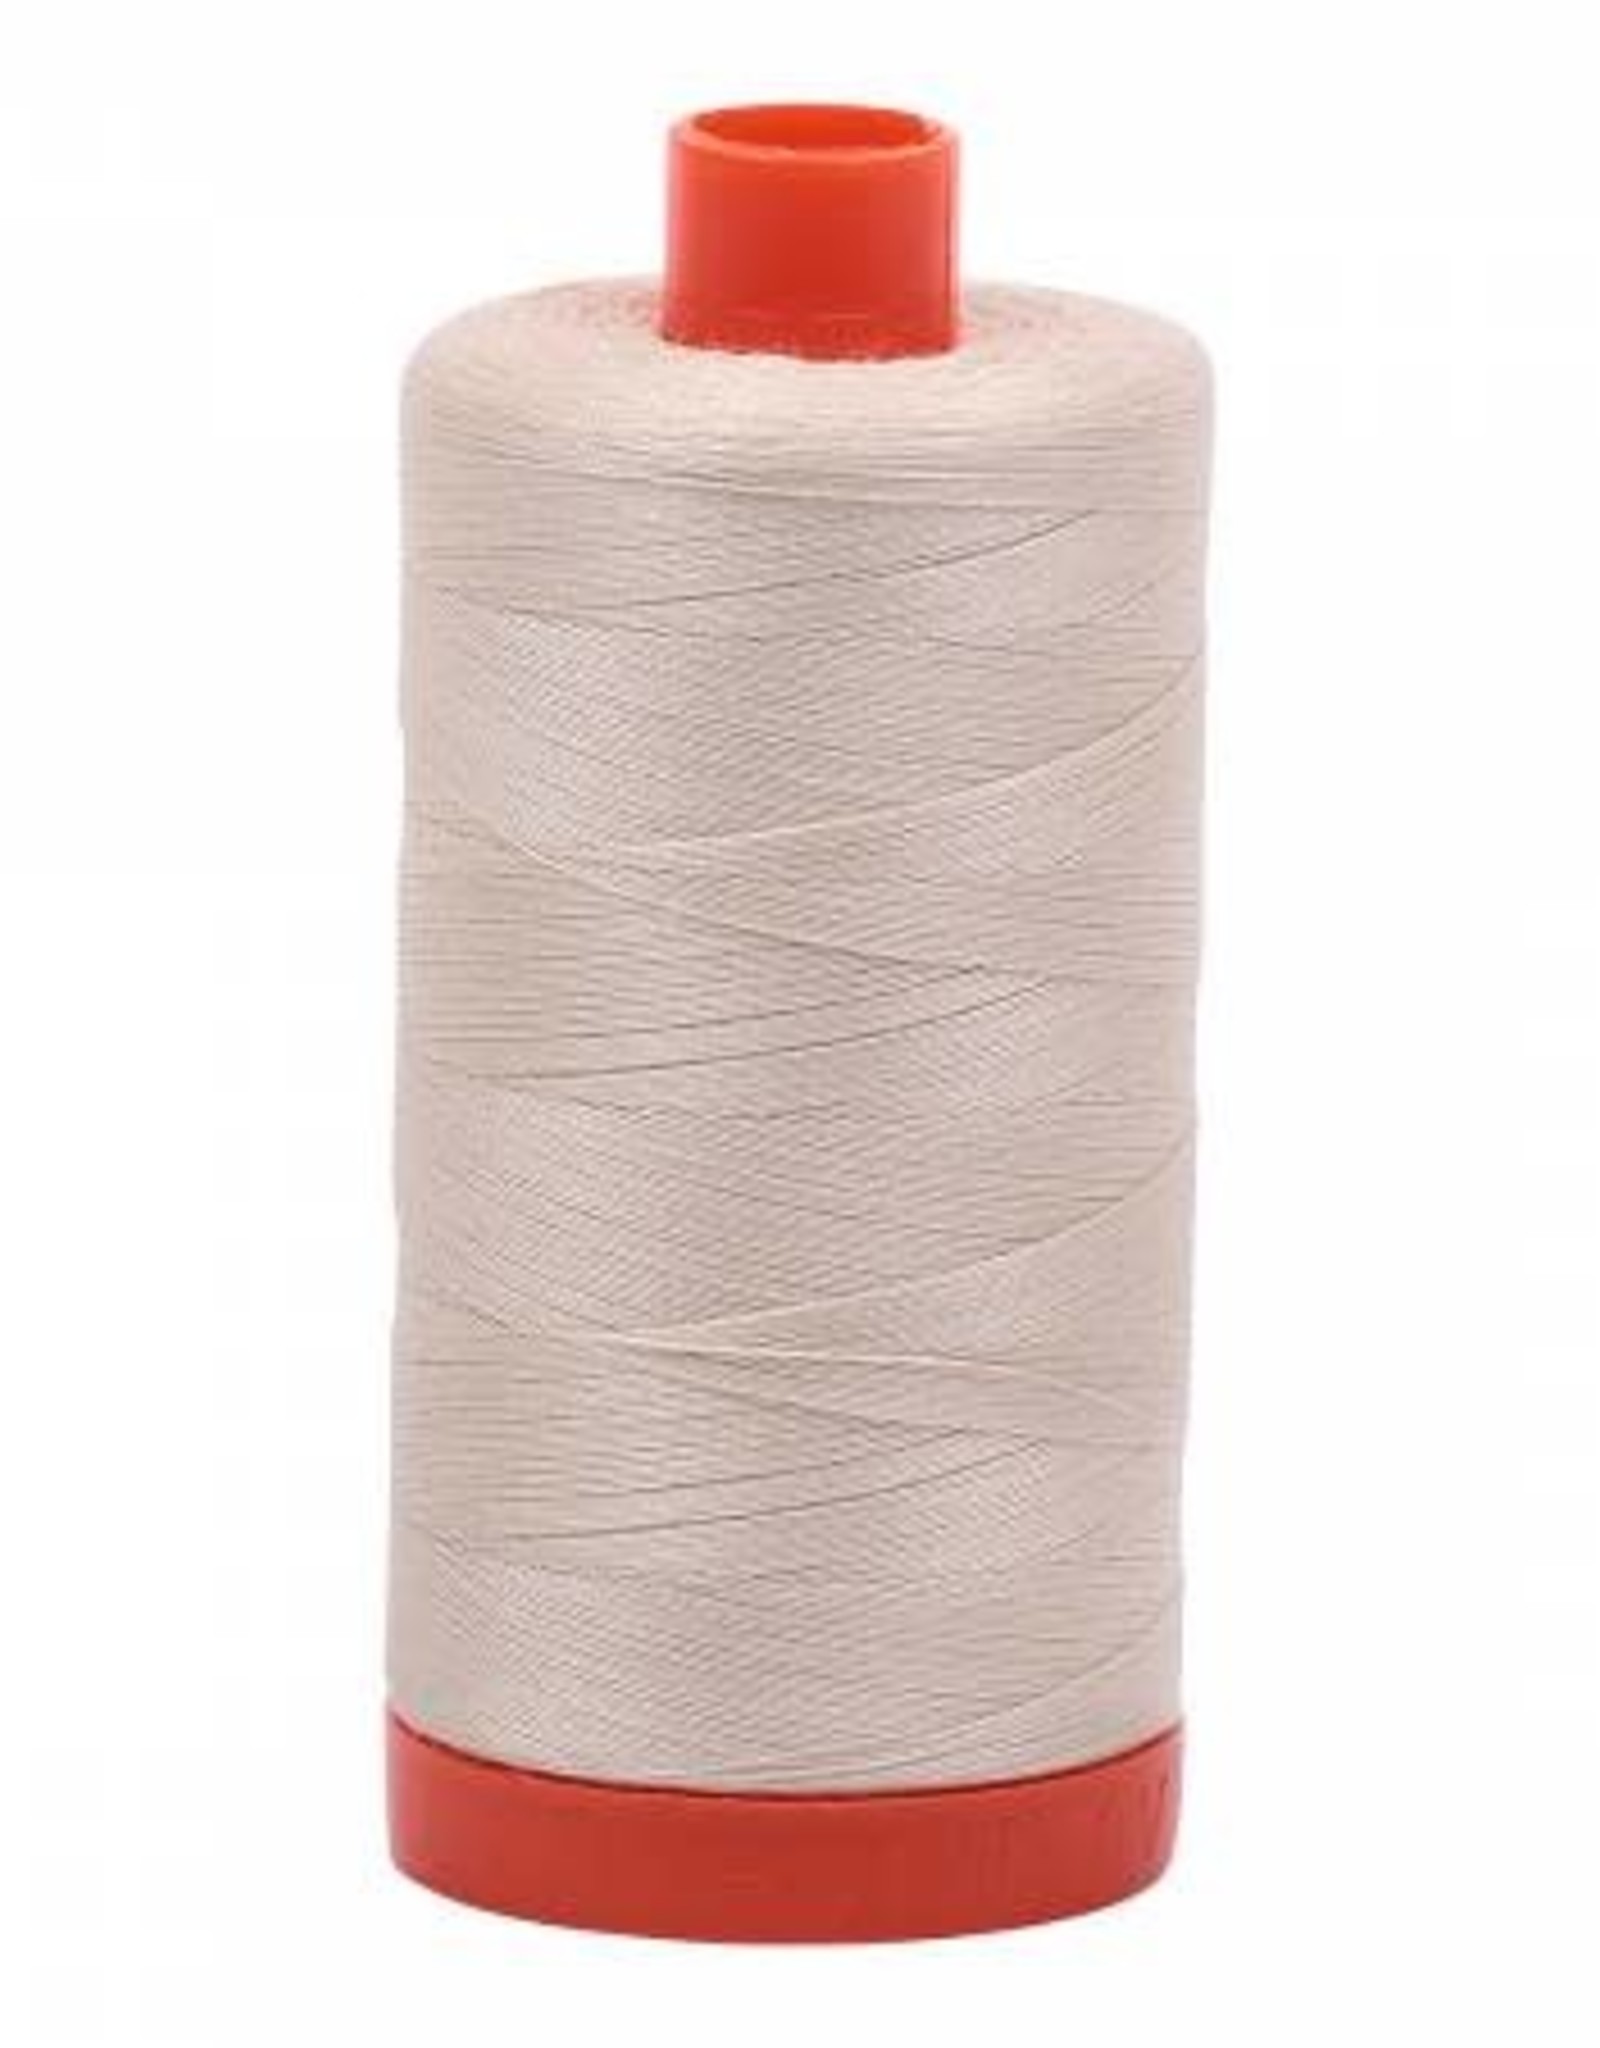 Mako Cotton Thread Solid 50wt -  Light Beige (2310)